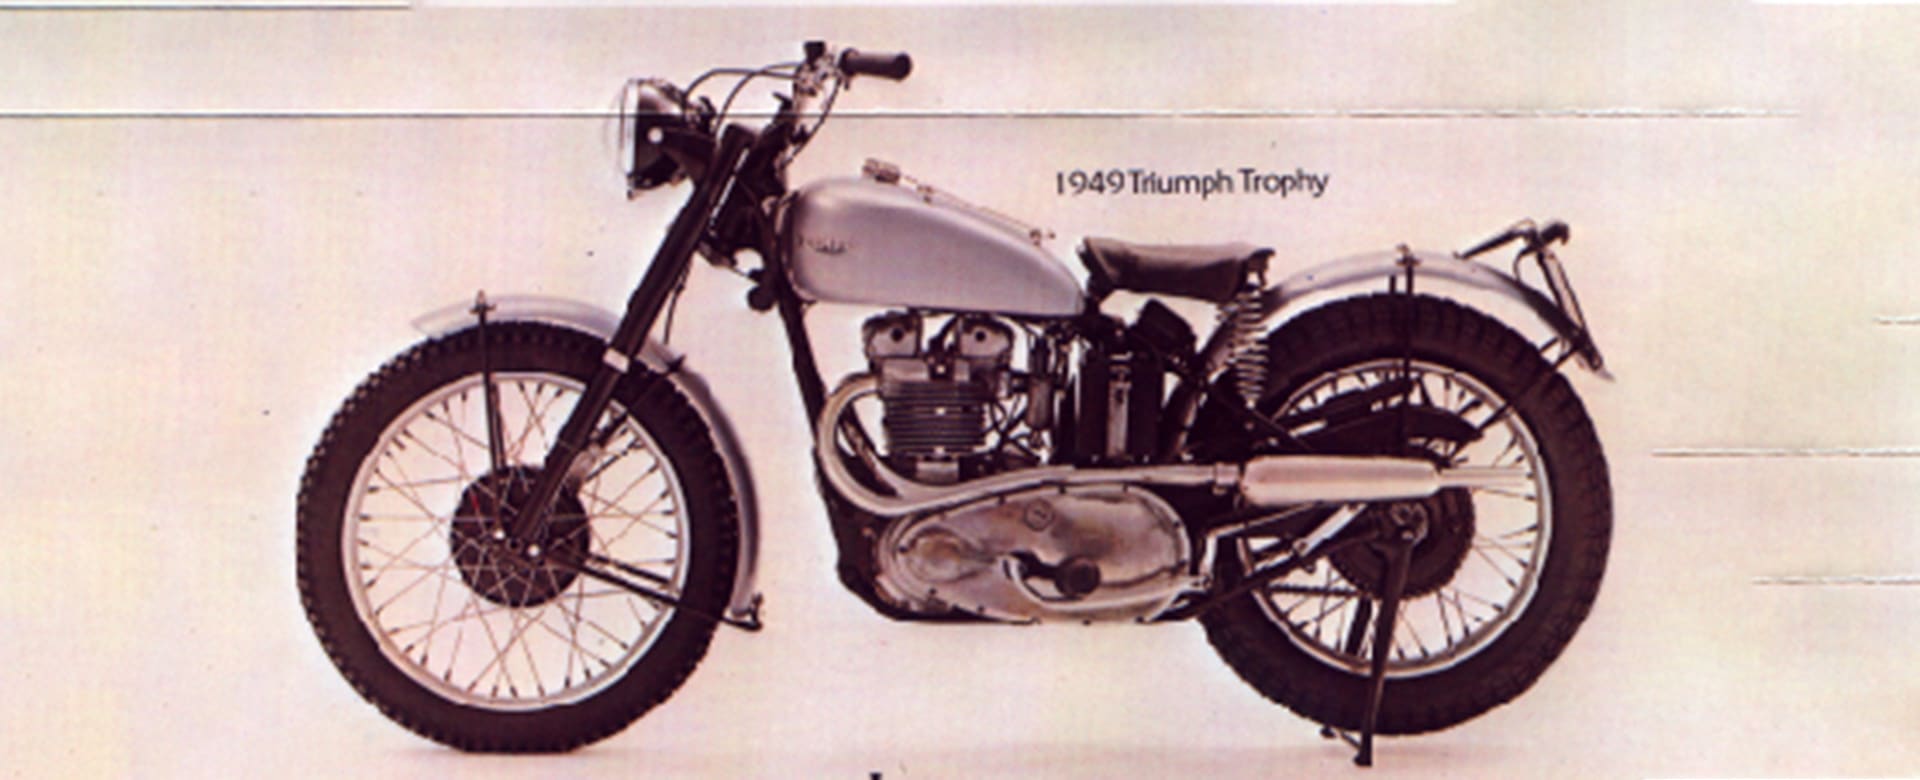 Triumph motorcycle design 